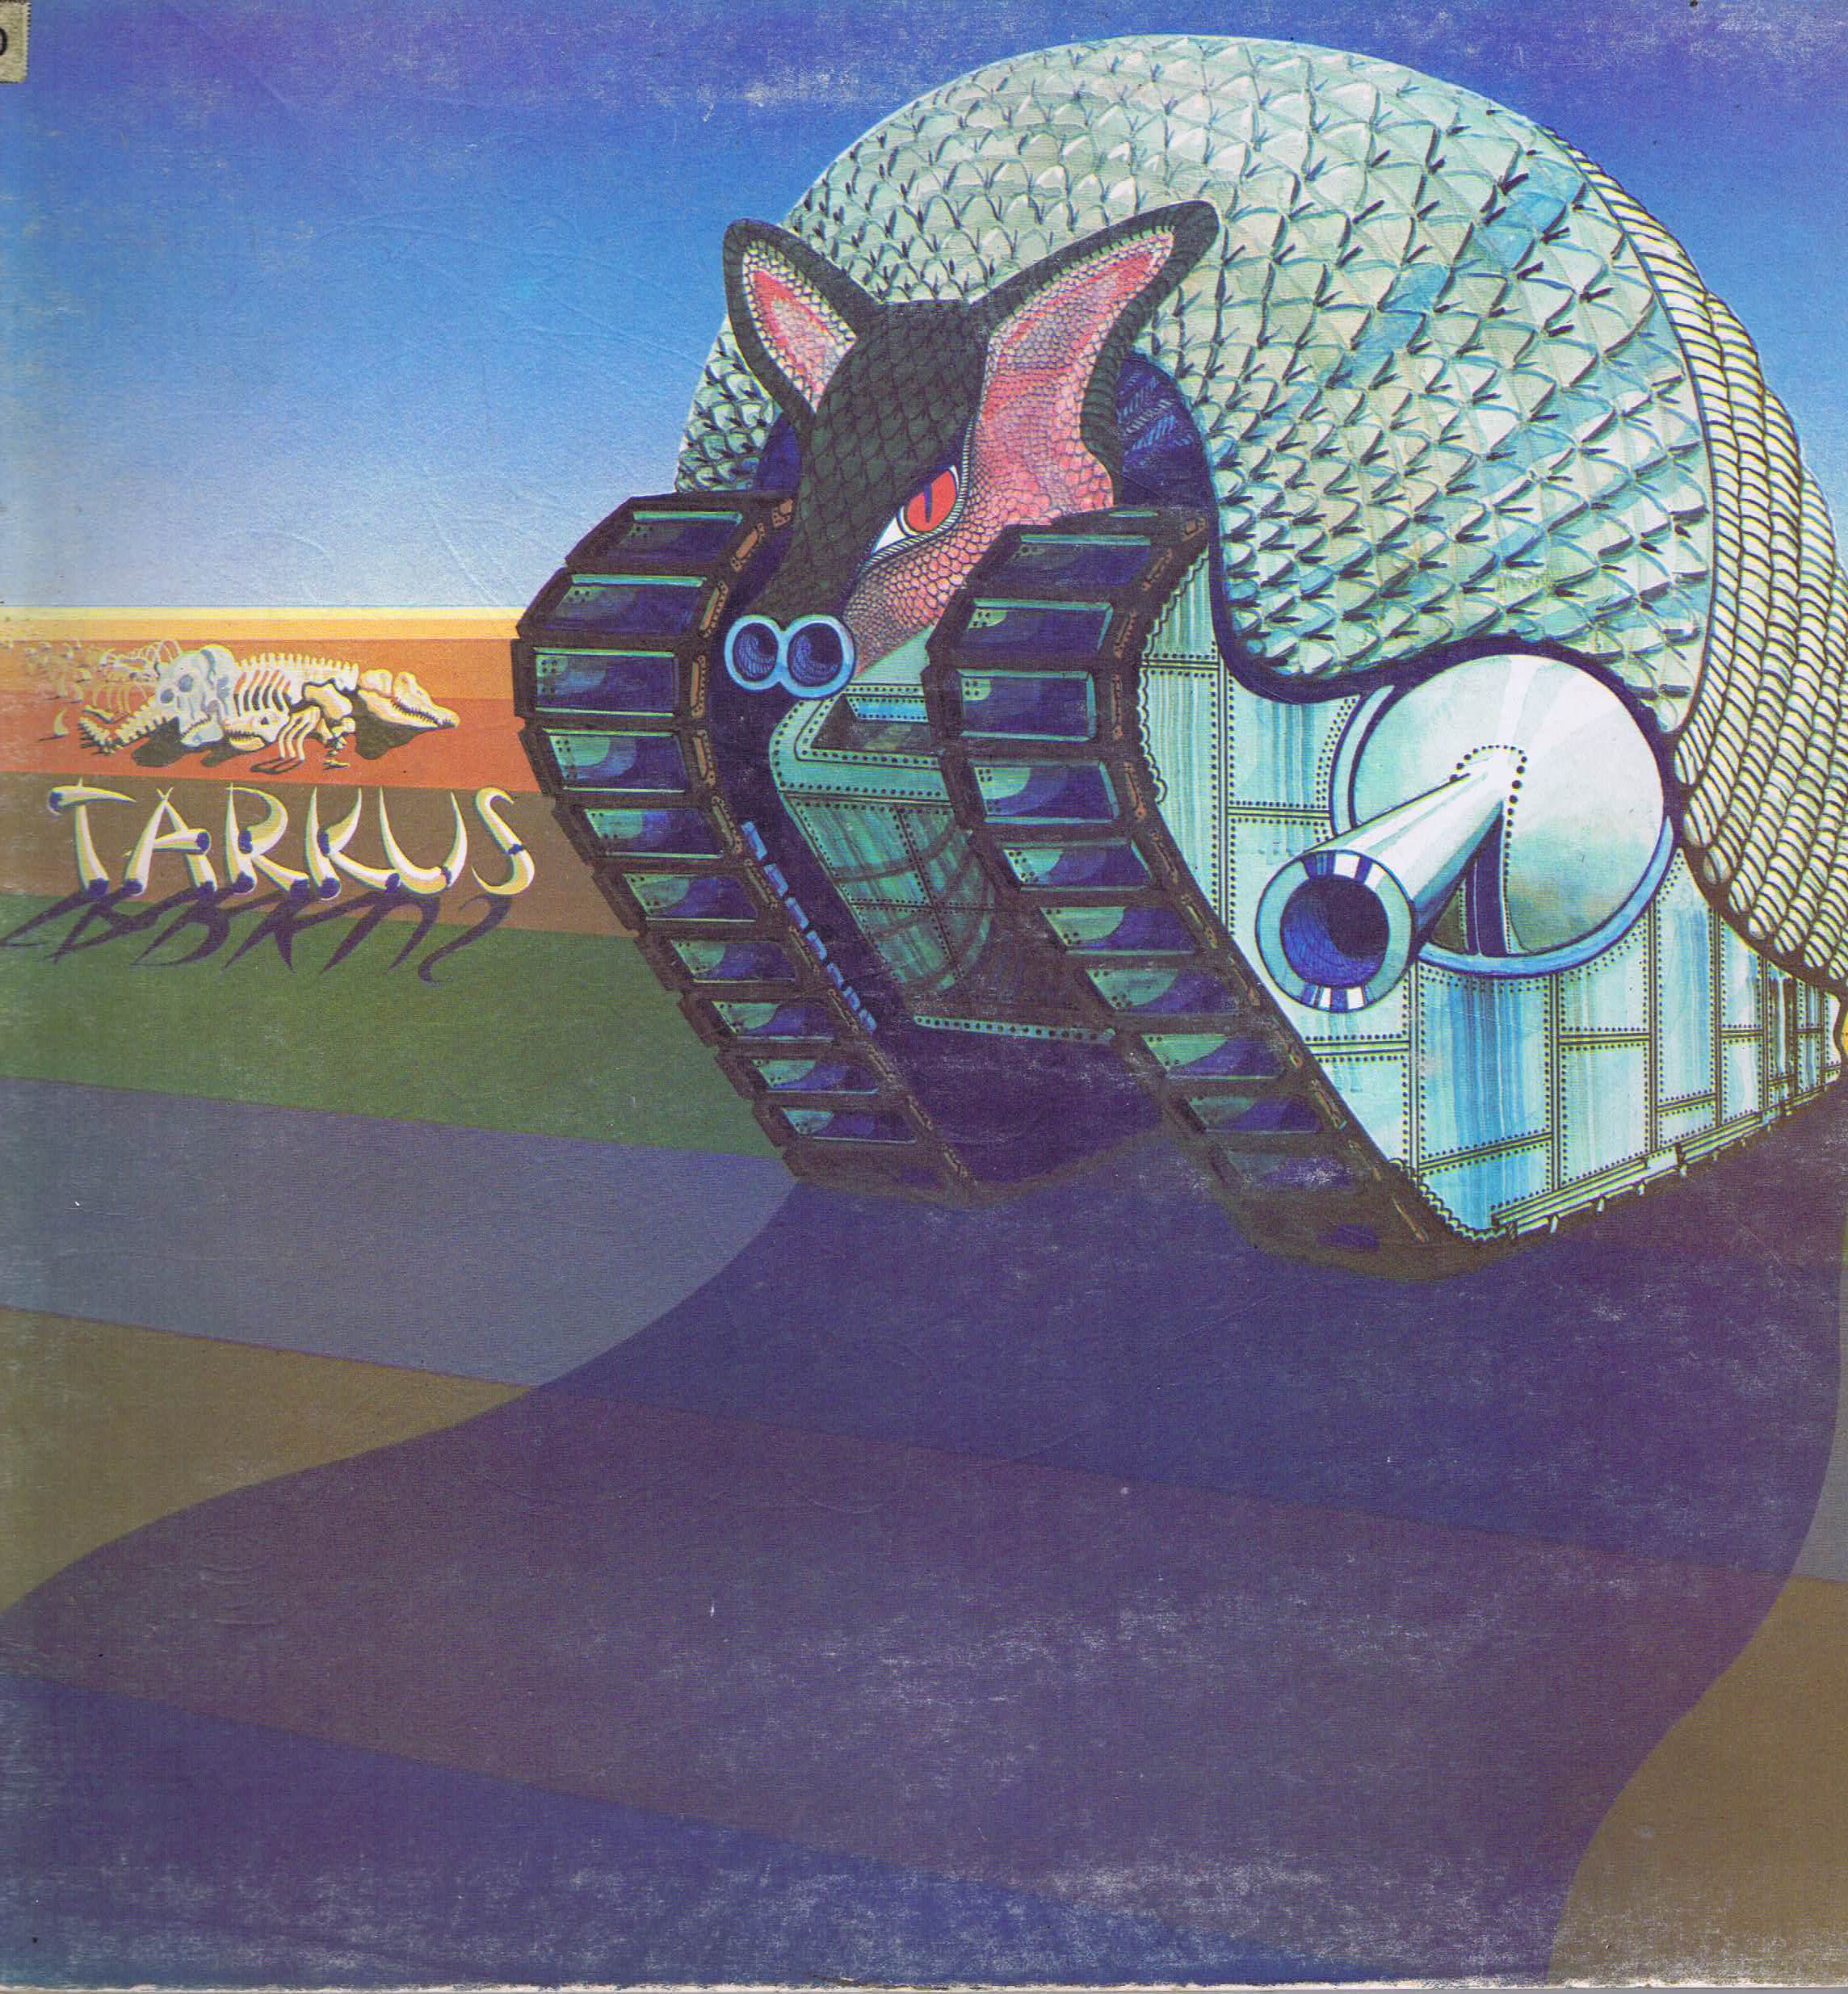 Tarkus Logo - Details about Emerson Lake & Palmer – Tarkus – ILPS 9155 - A-1U / B-1U - LP  Vinyl Record